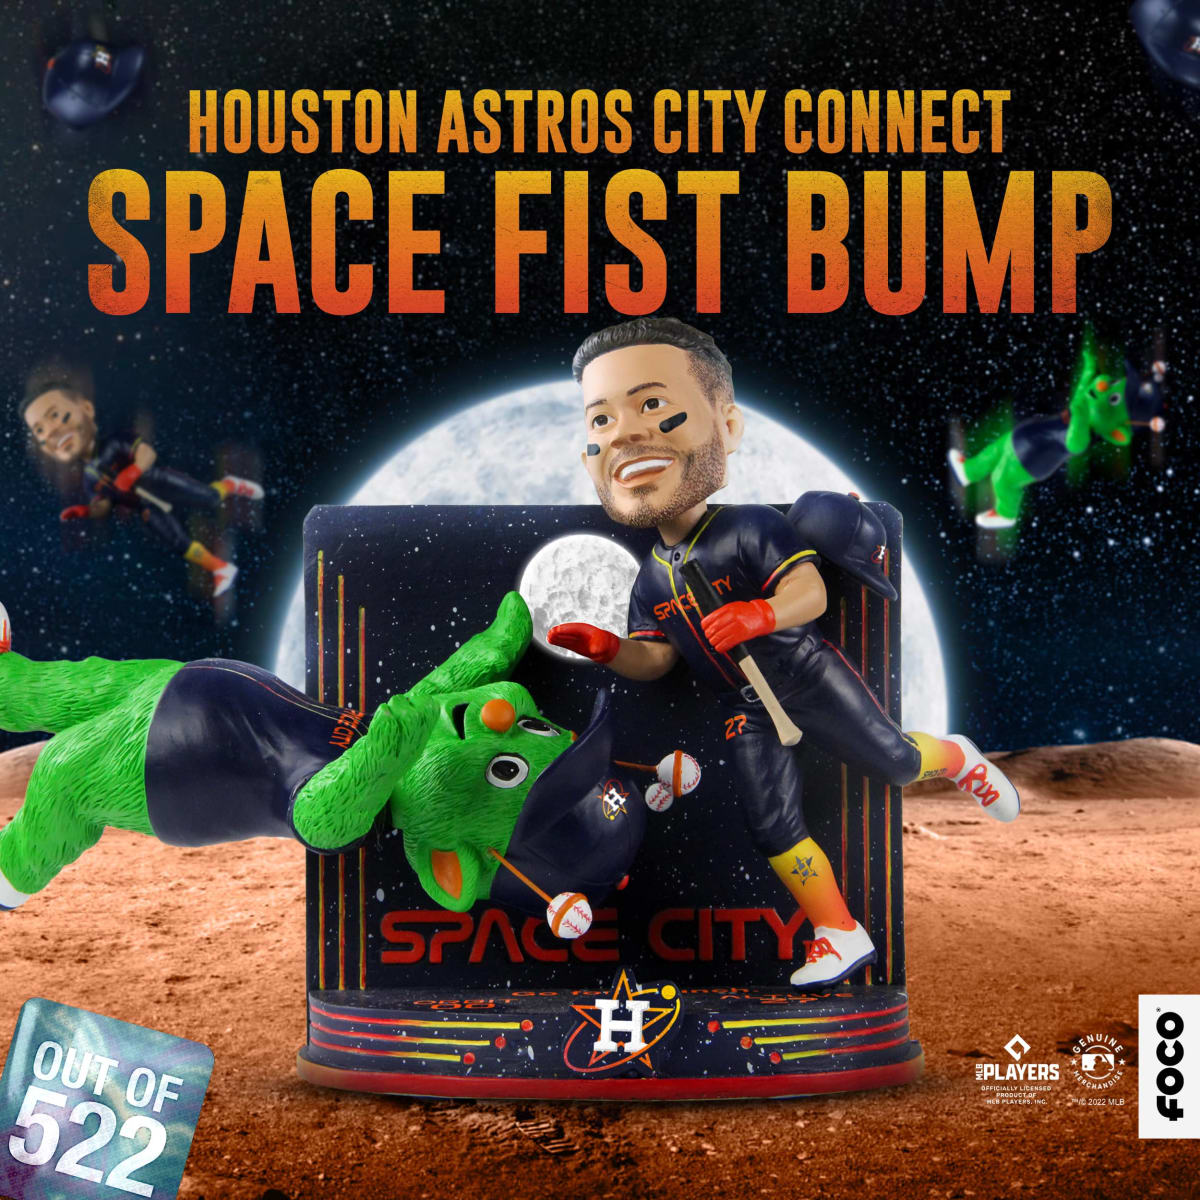 Astros' mascot Orbit offering surprise Valentine's Day visits - ABC13  Houston